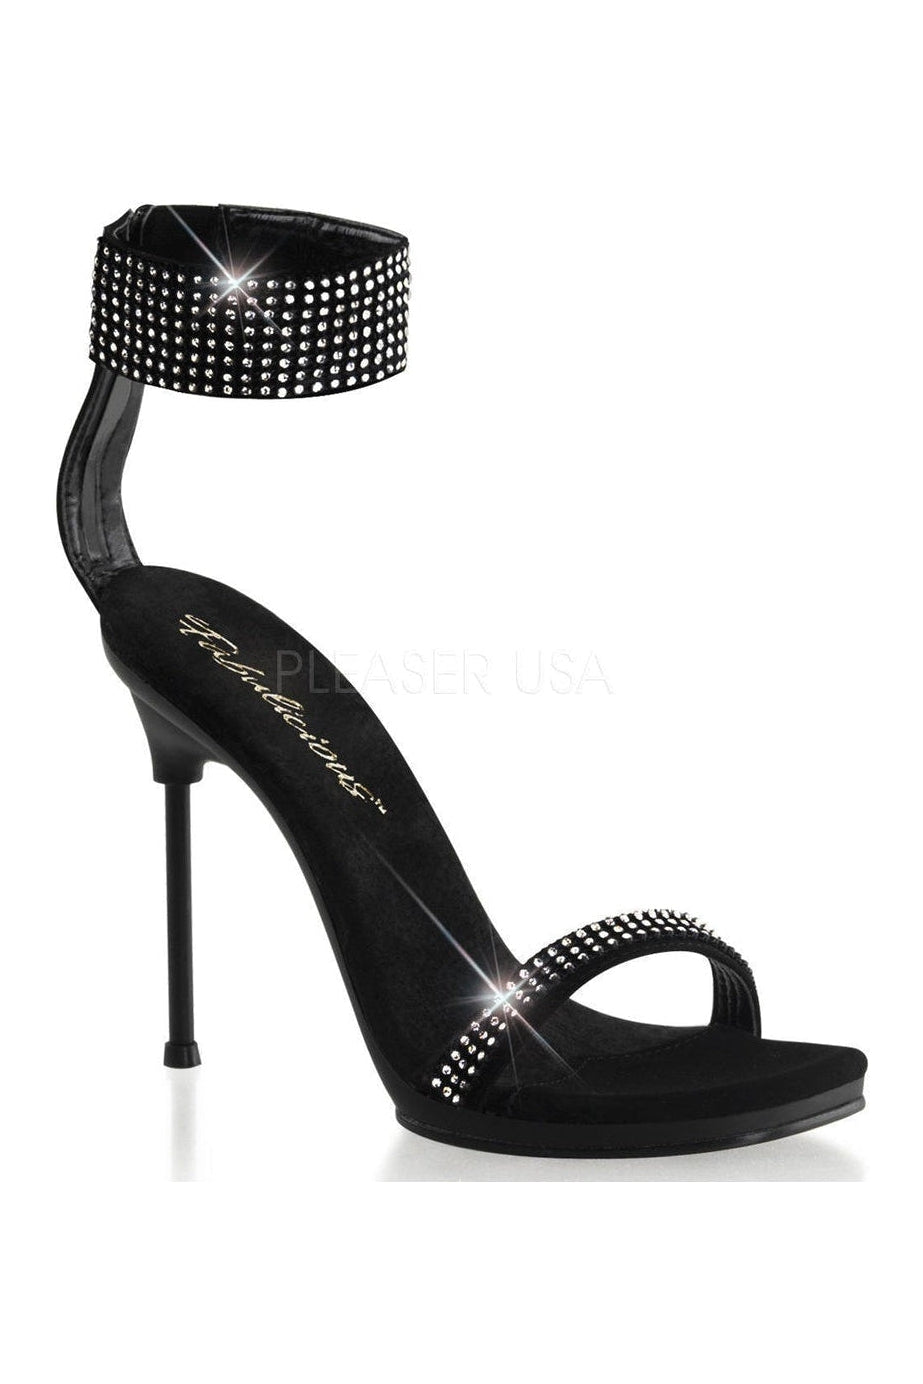 CHIC-40 Sandal | Black Faux Leather-Fabulicious-Black-Sandals-SEXYSHOES.COM